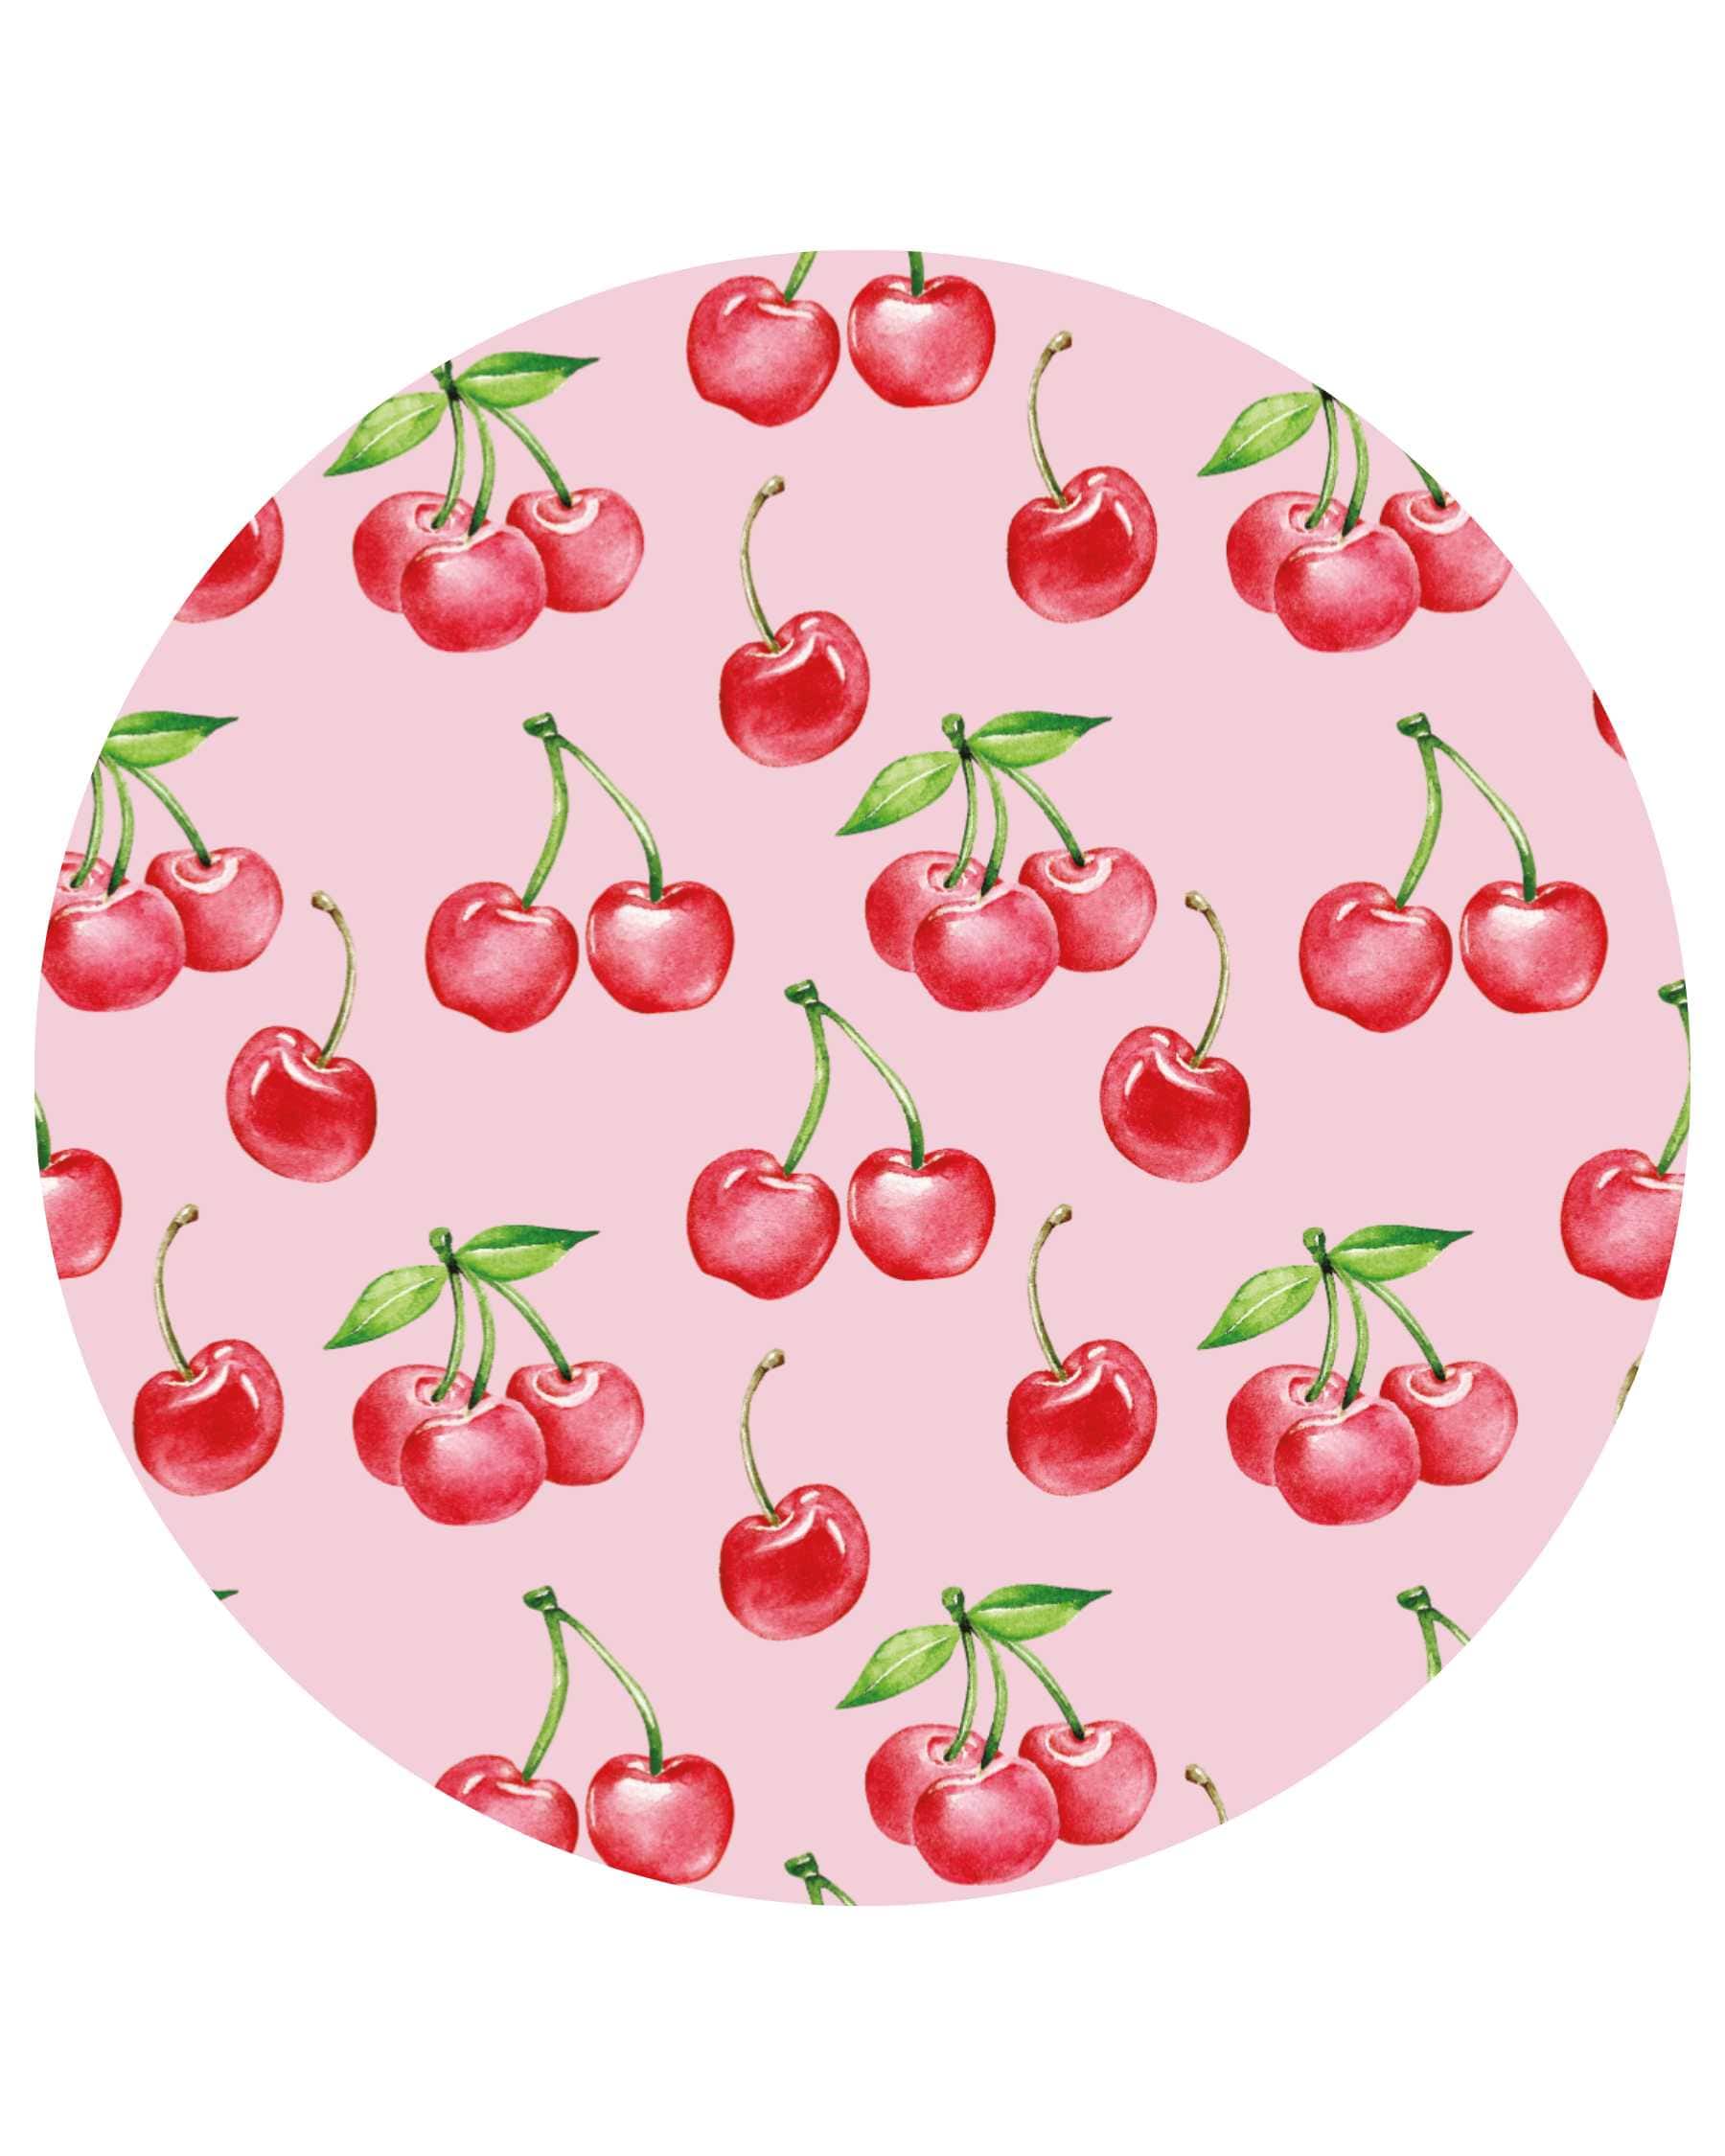 Cherry 'Poppy': The Convertible Romper